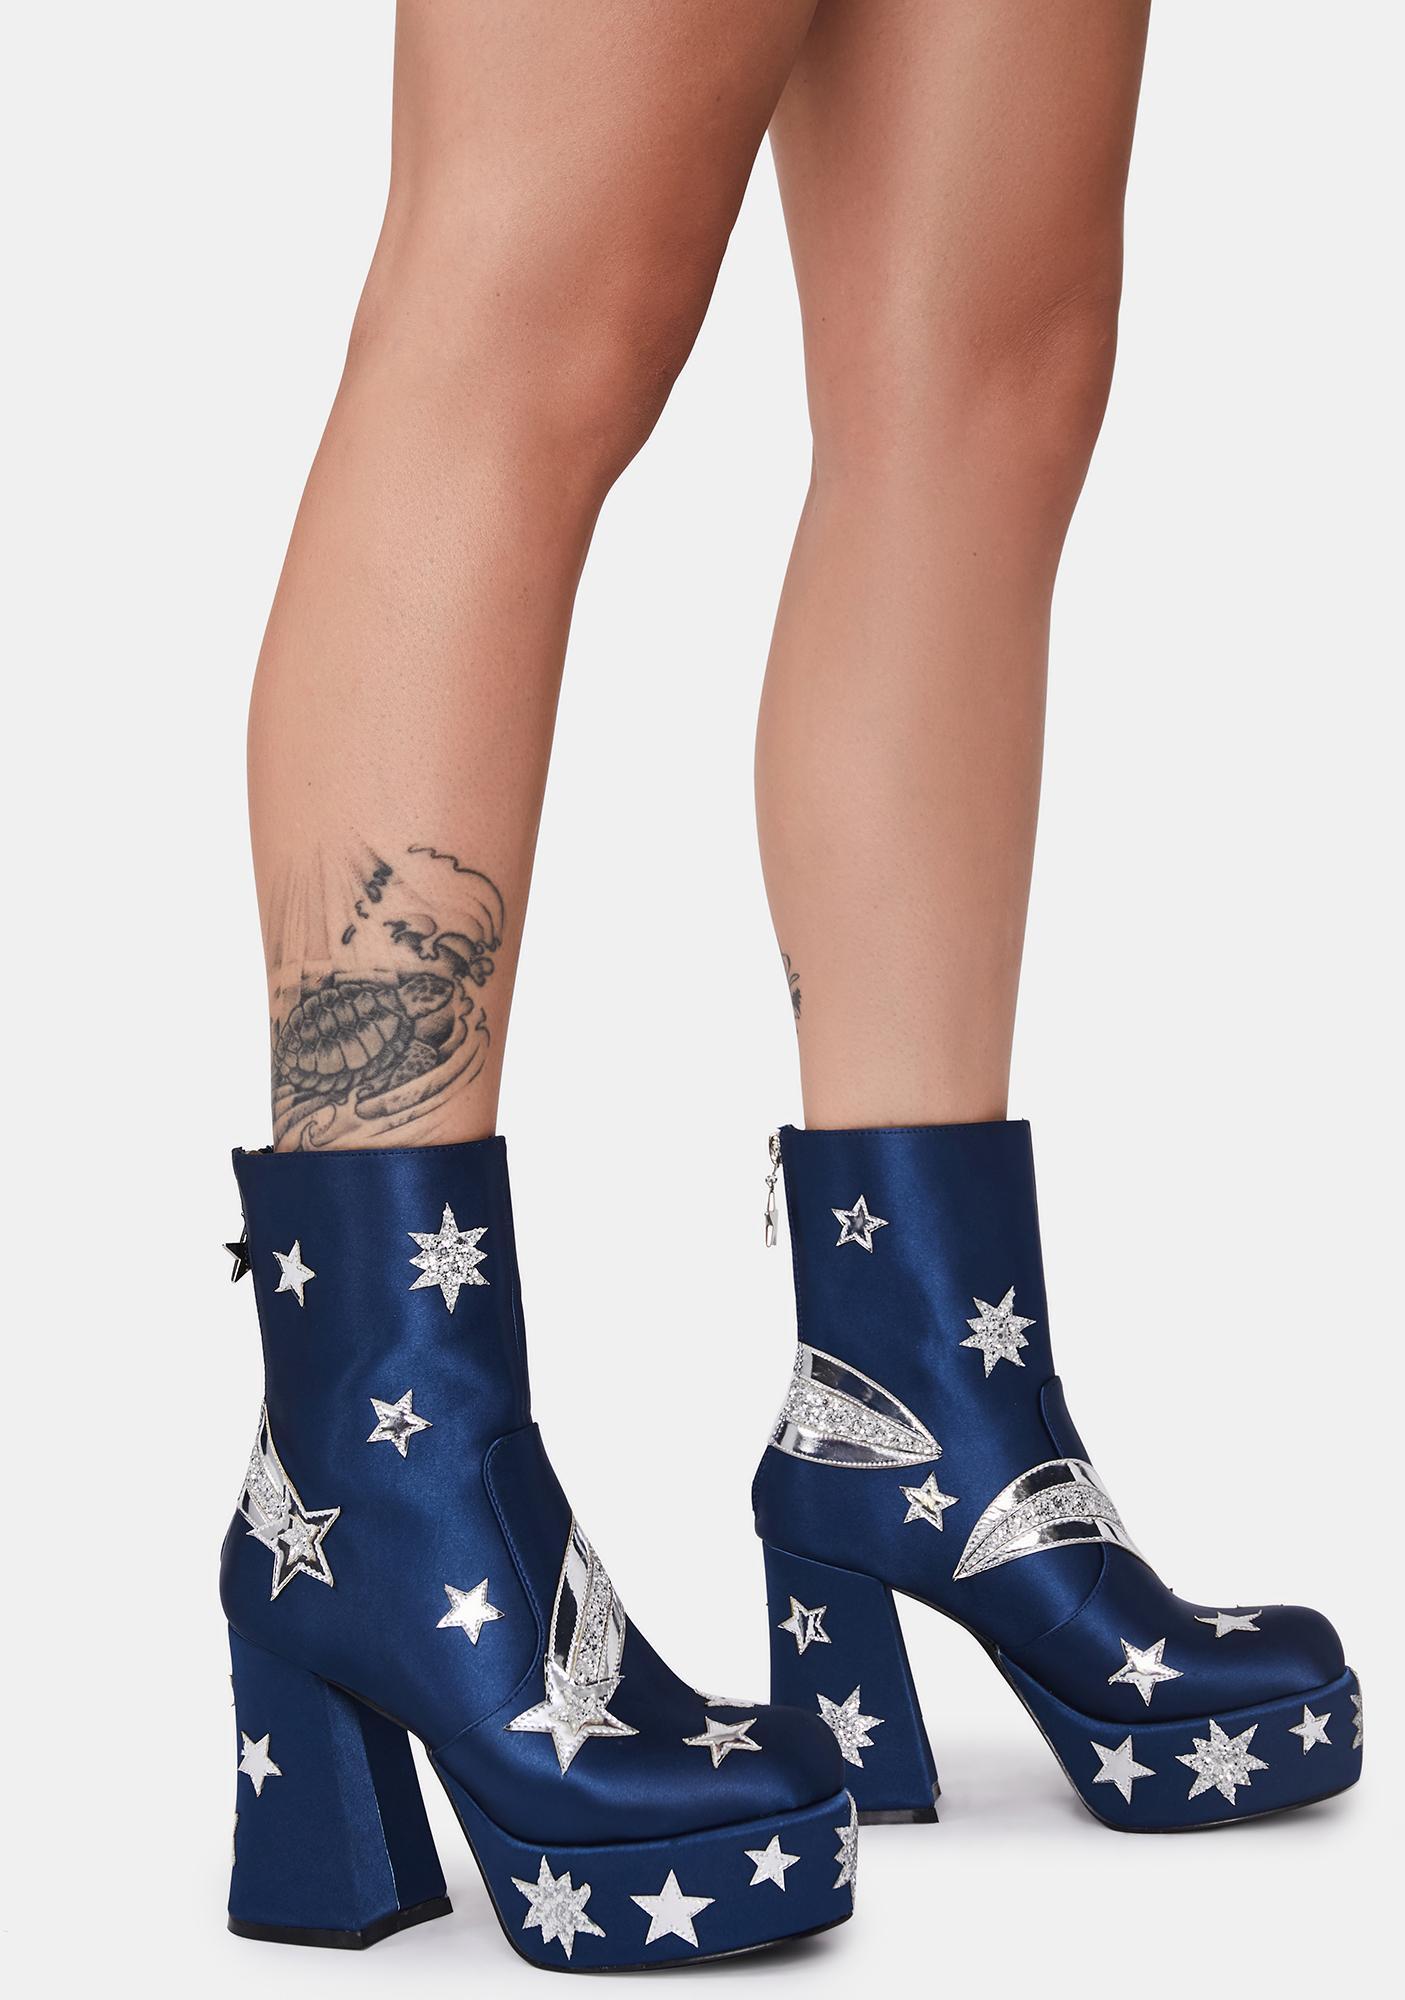 Horoscopez Libra Embroidered Stars Platform Boots - Blue | Dolls Kill